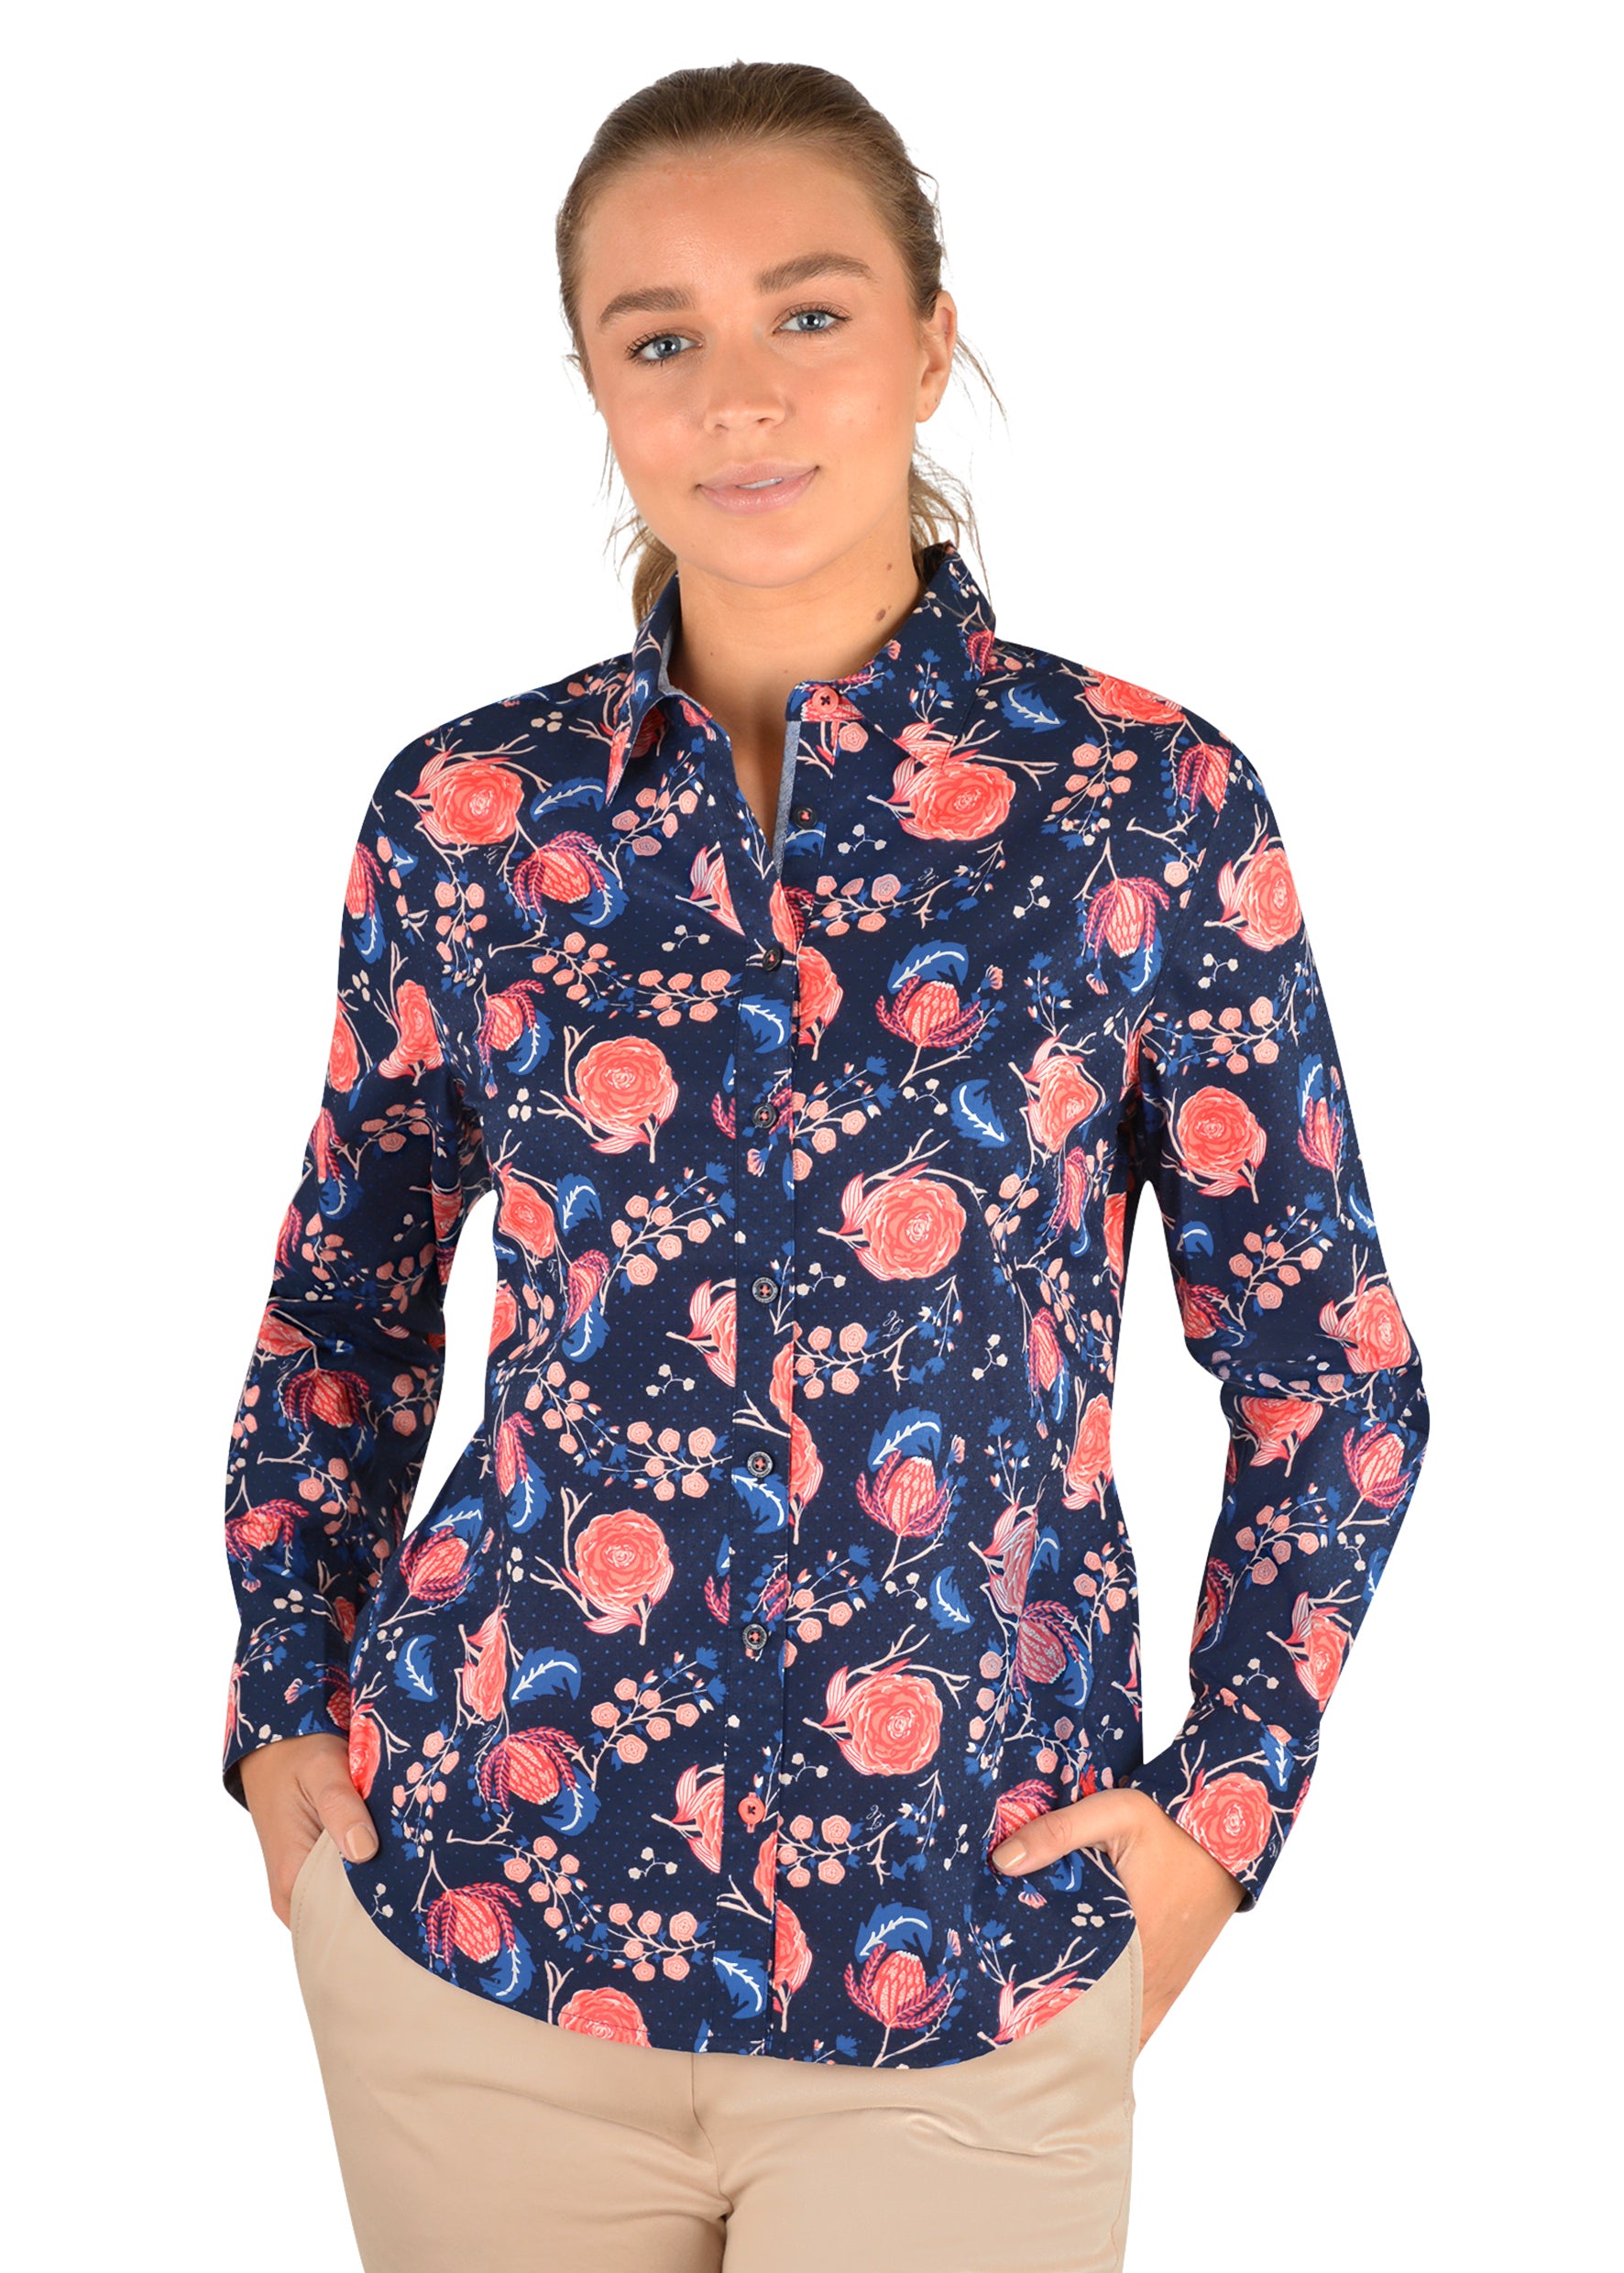 Womens Thomas Cook Raechel Floral Print Long Sleeve Shirt - Navy / Multi (6785481801805)